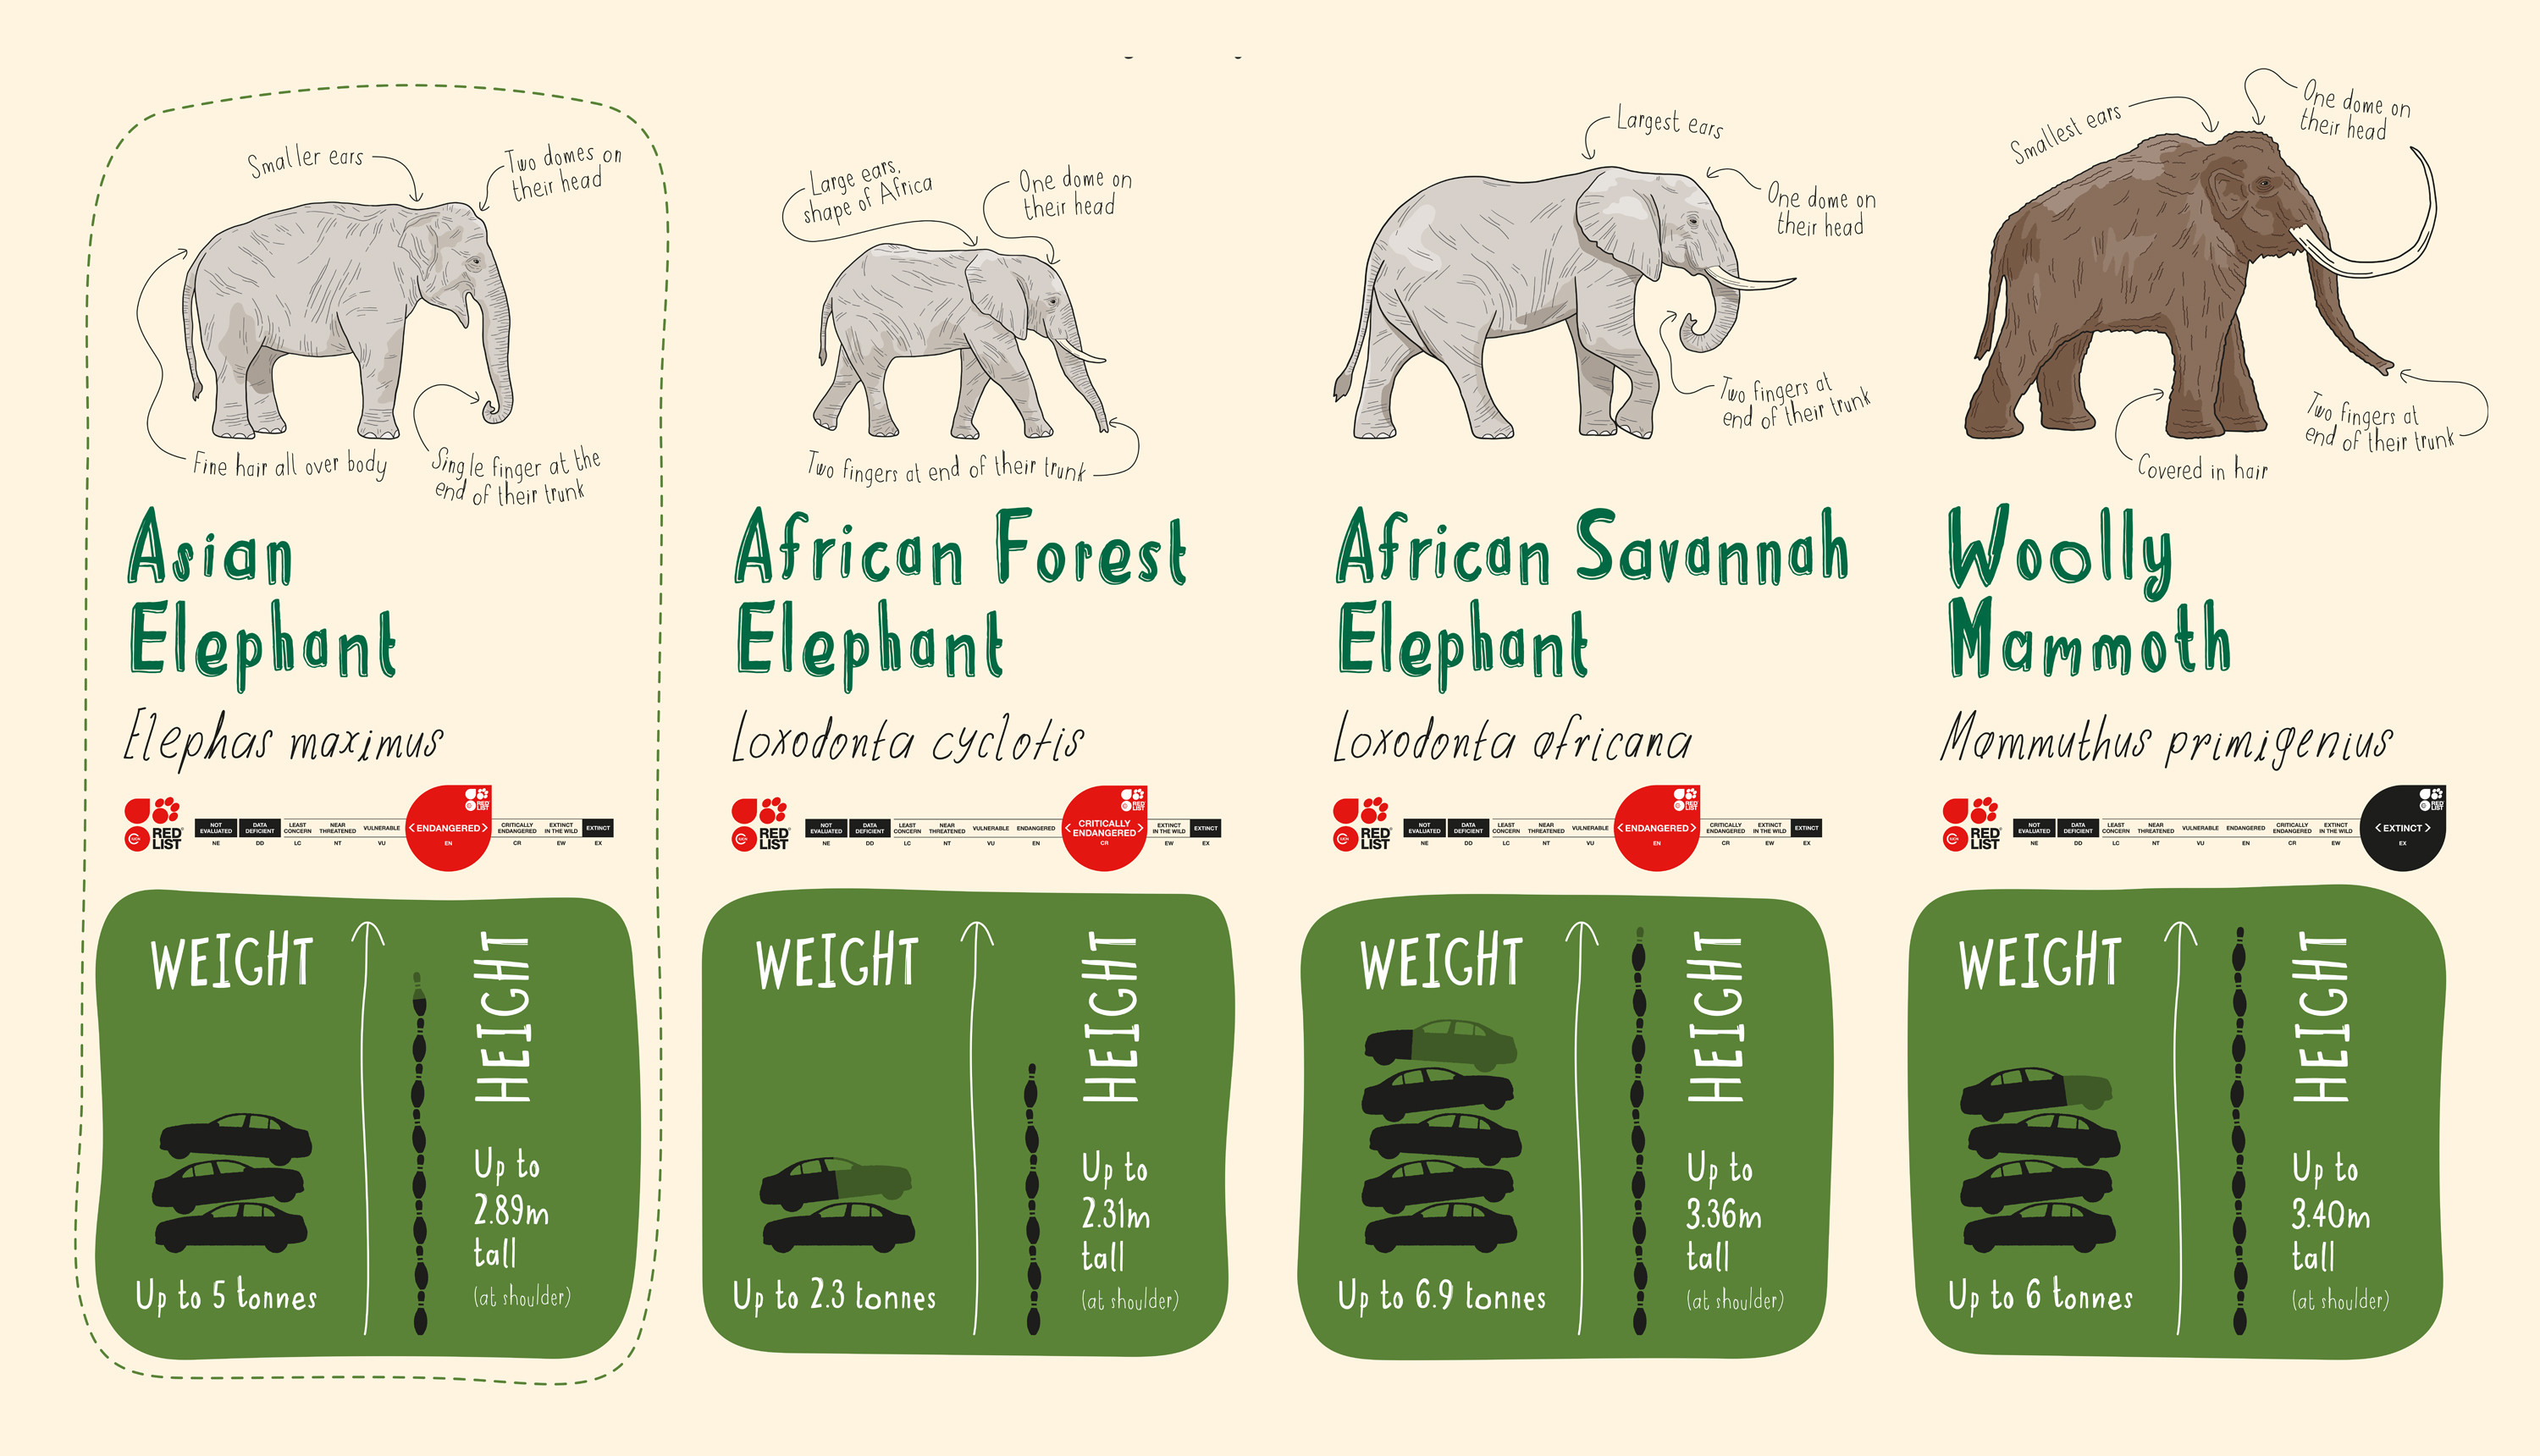 Elephant illustration infographic by Root Studio